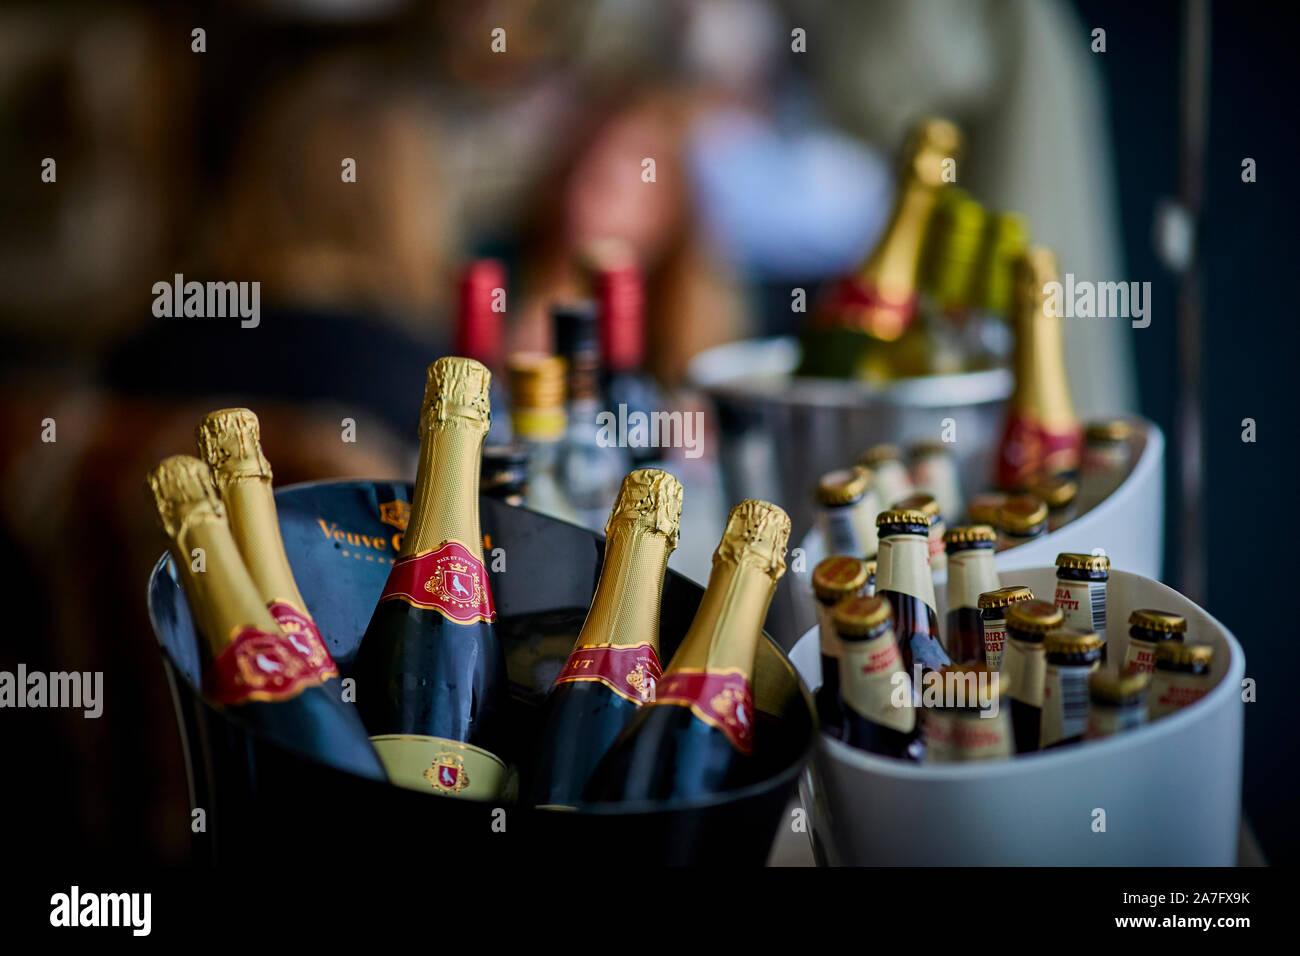 Manchester Hilton Hotel champagne bottles Stock Photo